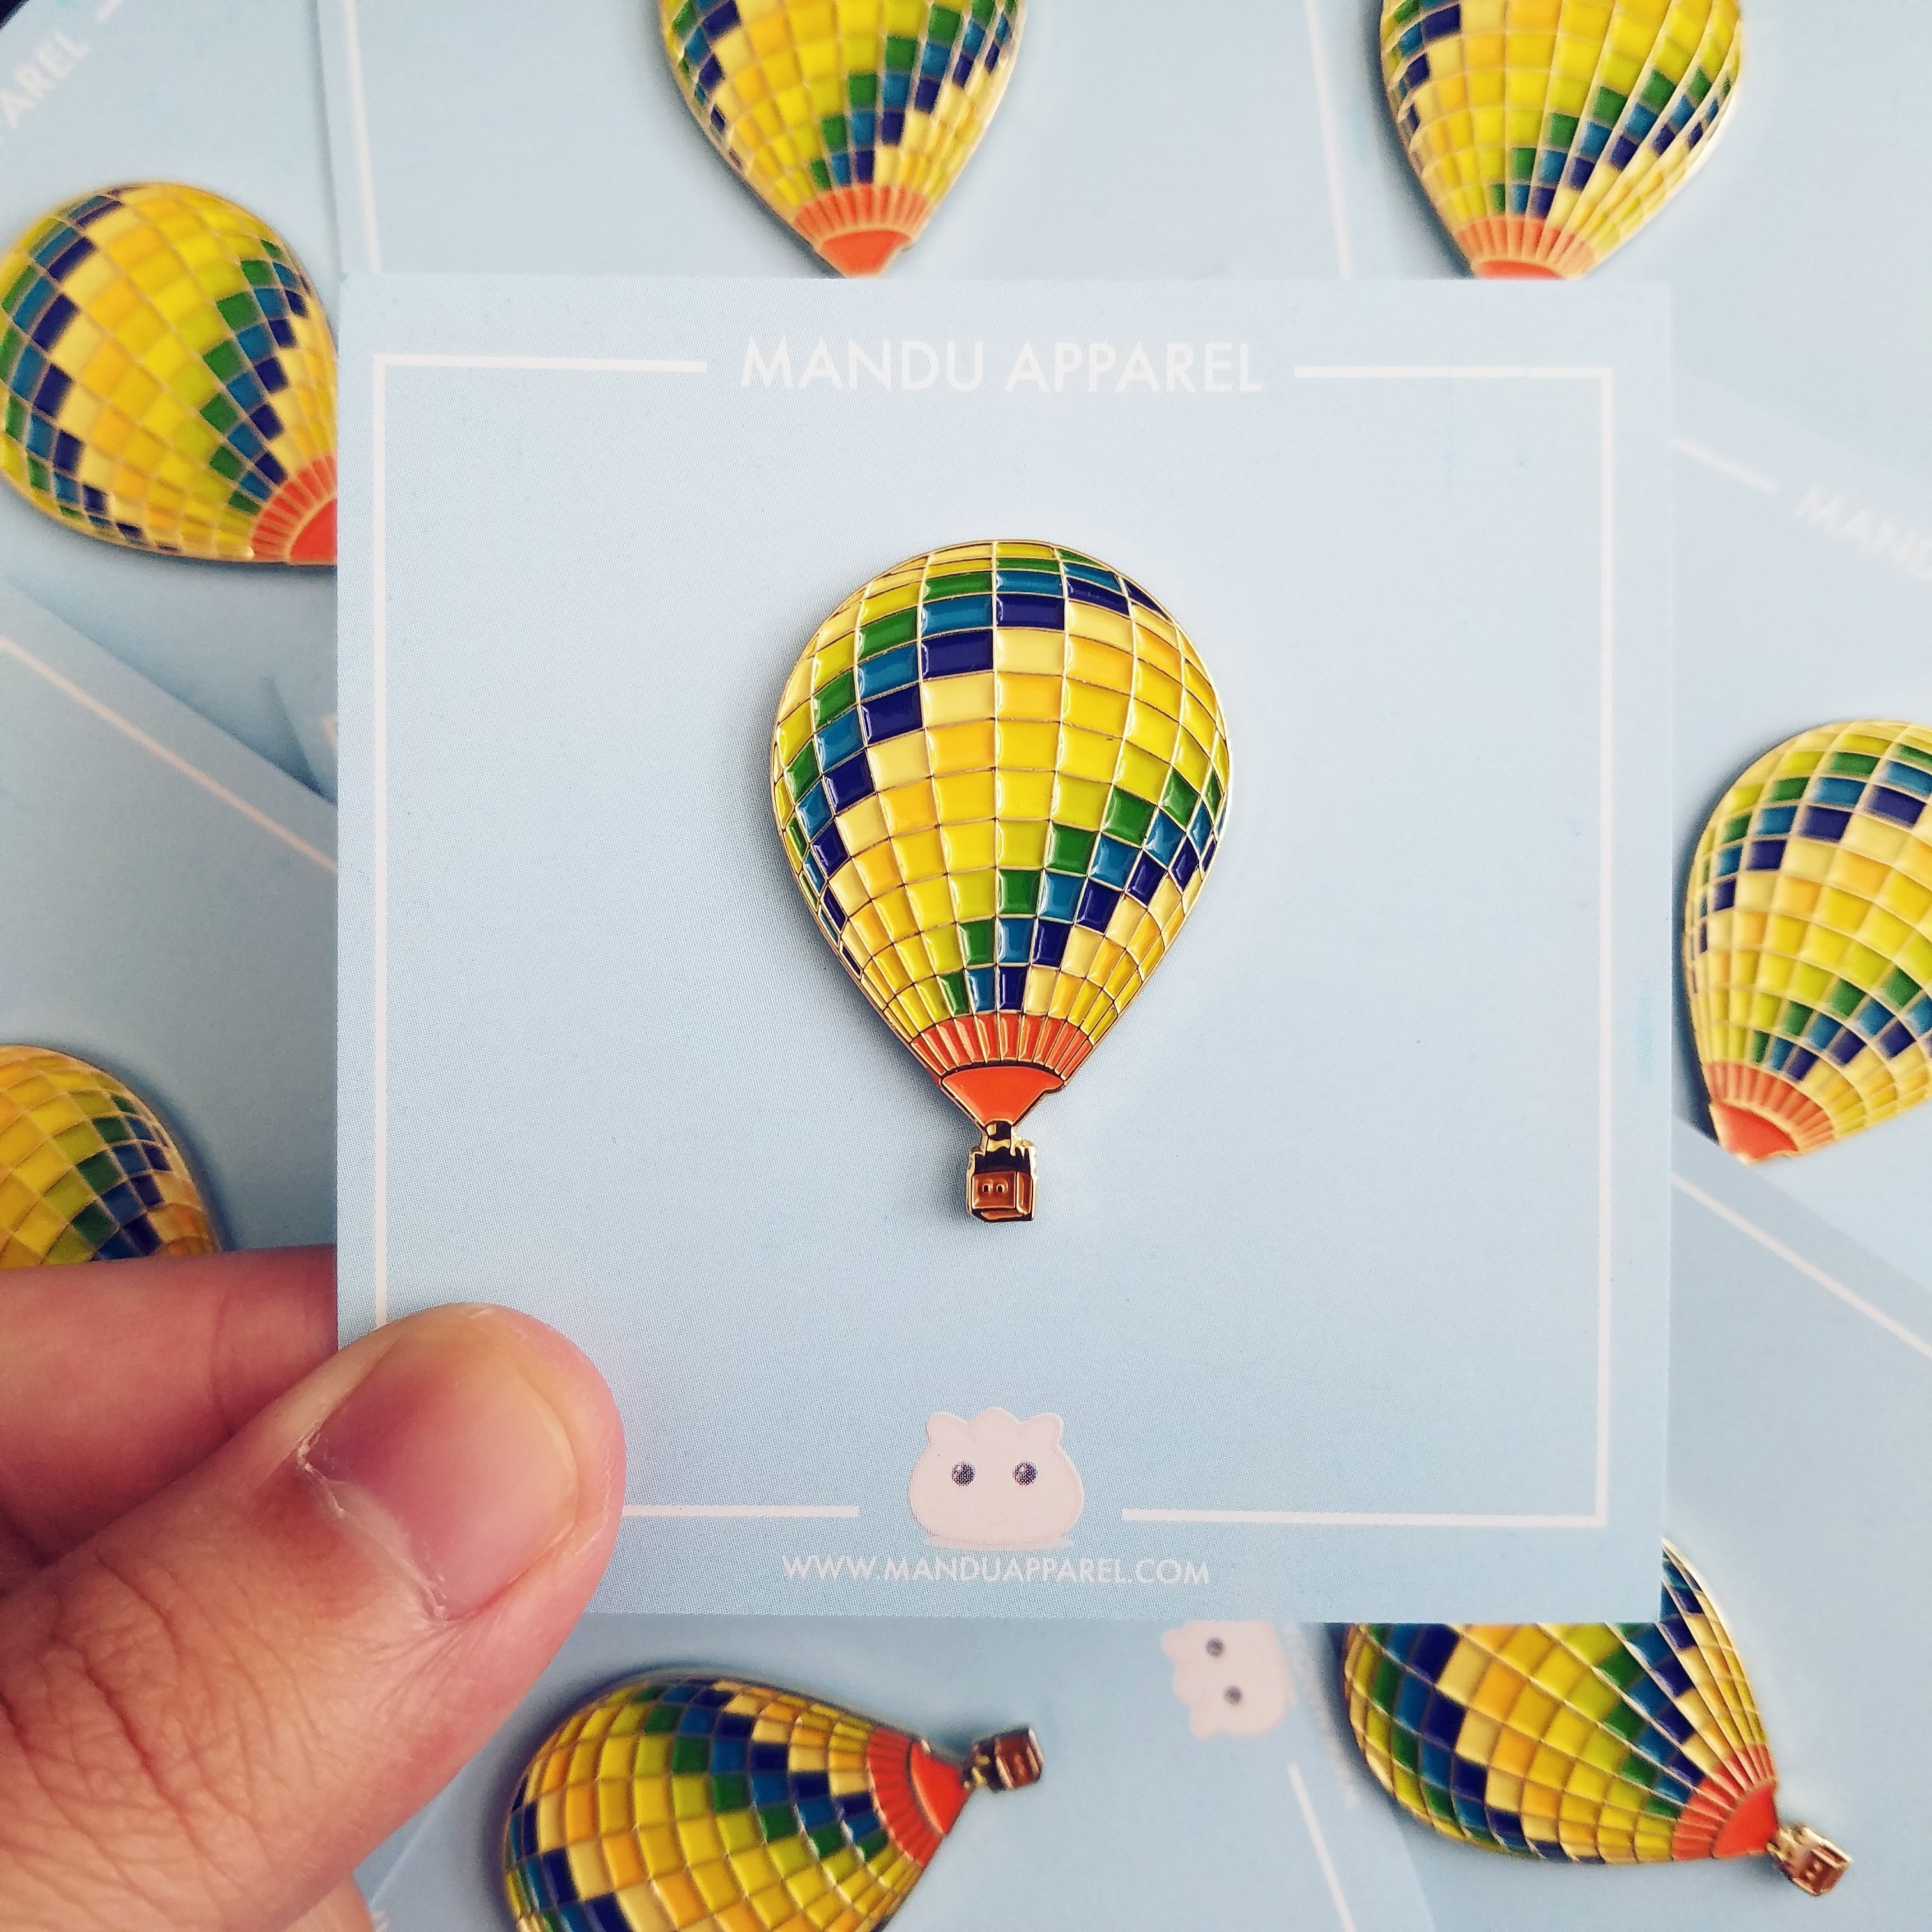 BTS Young Forever Hot Air Balloon Pin - Mandu Apparel